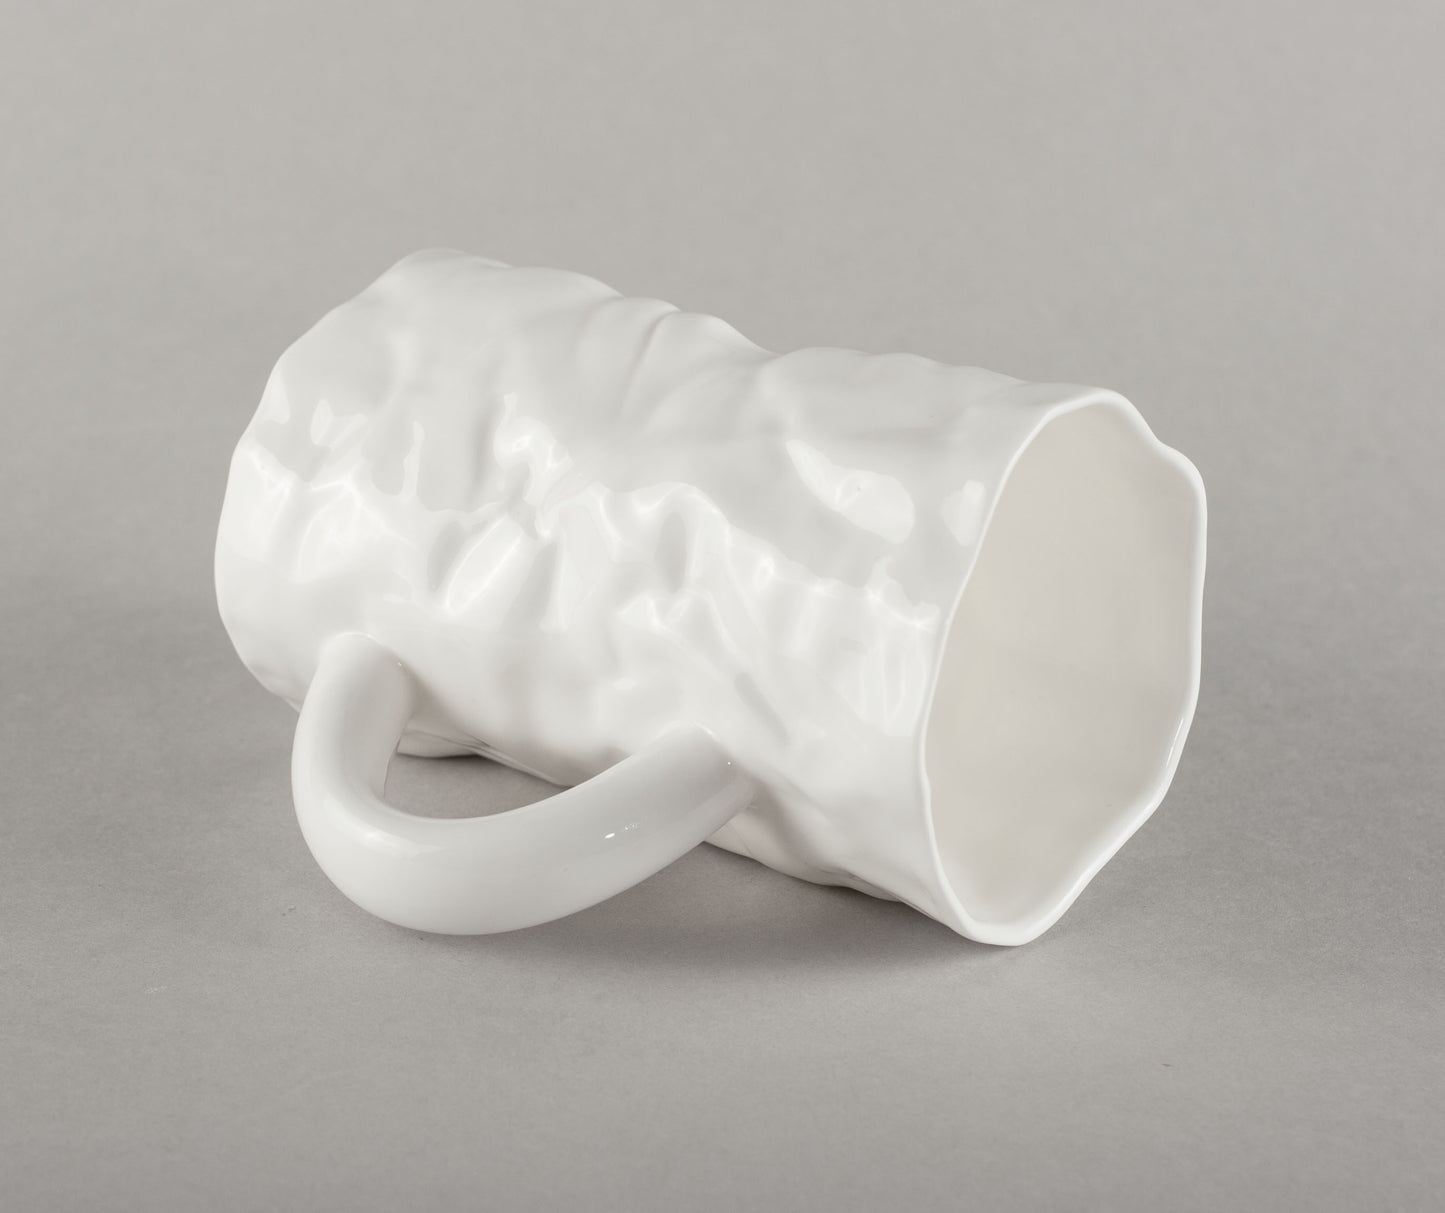 Porcelain Crumpled "Kiss" Mug